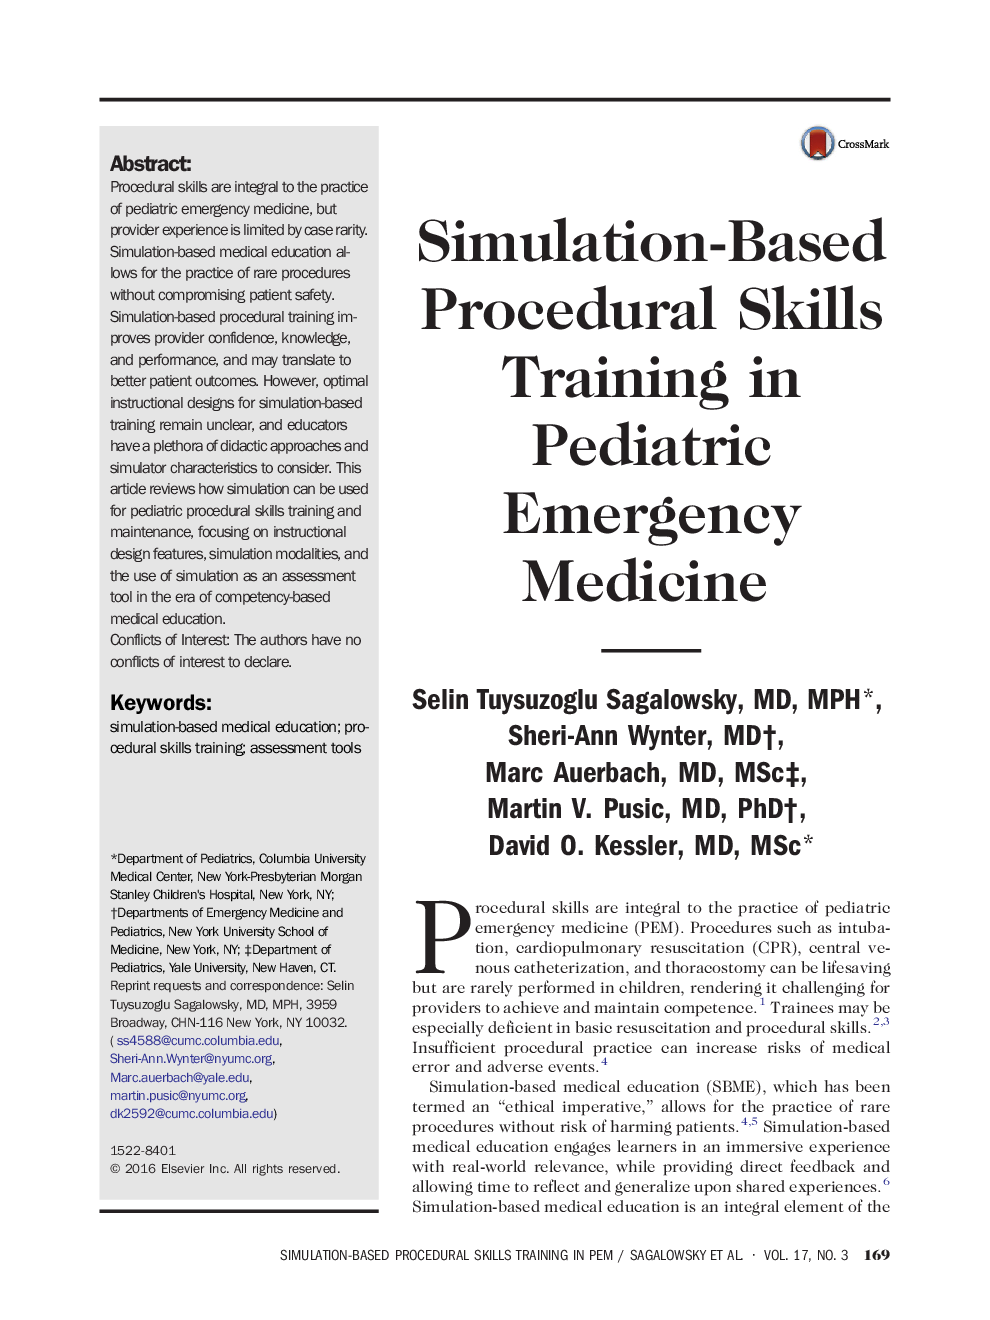 Simulation-Based Procedural Skills Training in Pediatric Emergency Medicine 